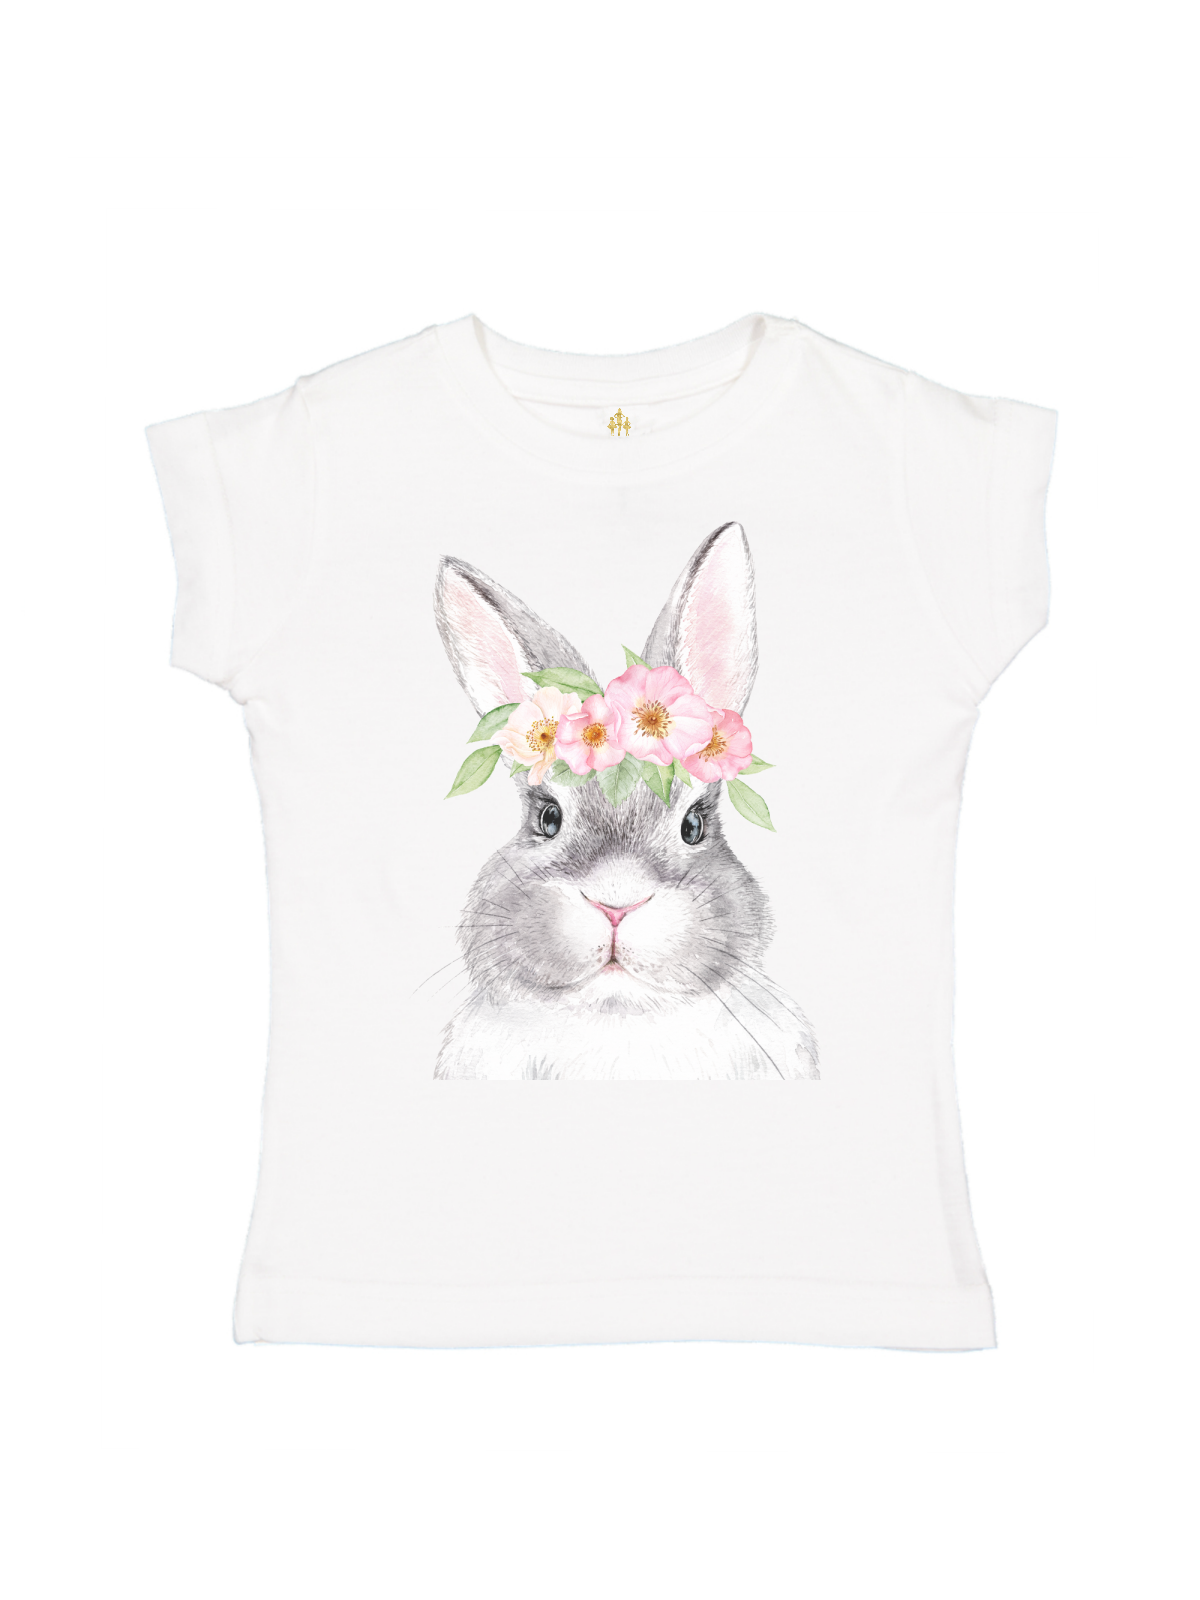 Flower Crown Bunny Shirt for Girl in White